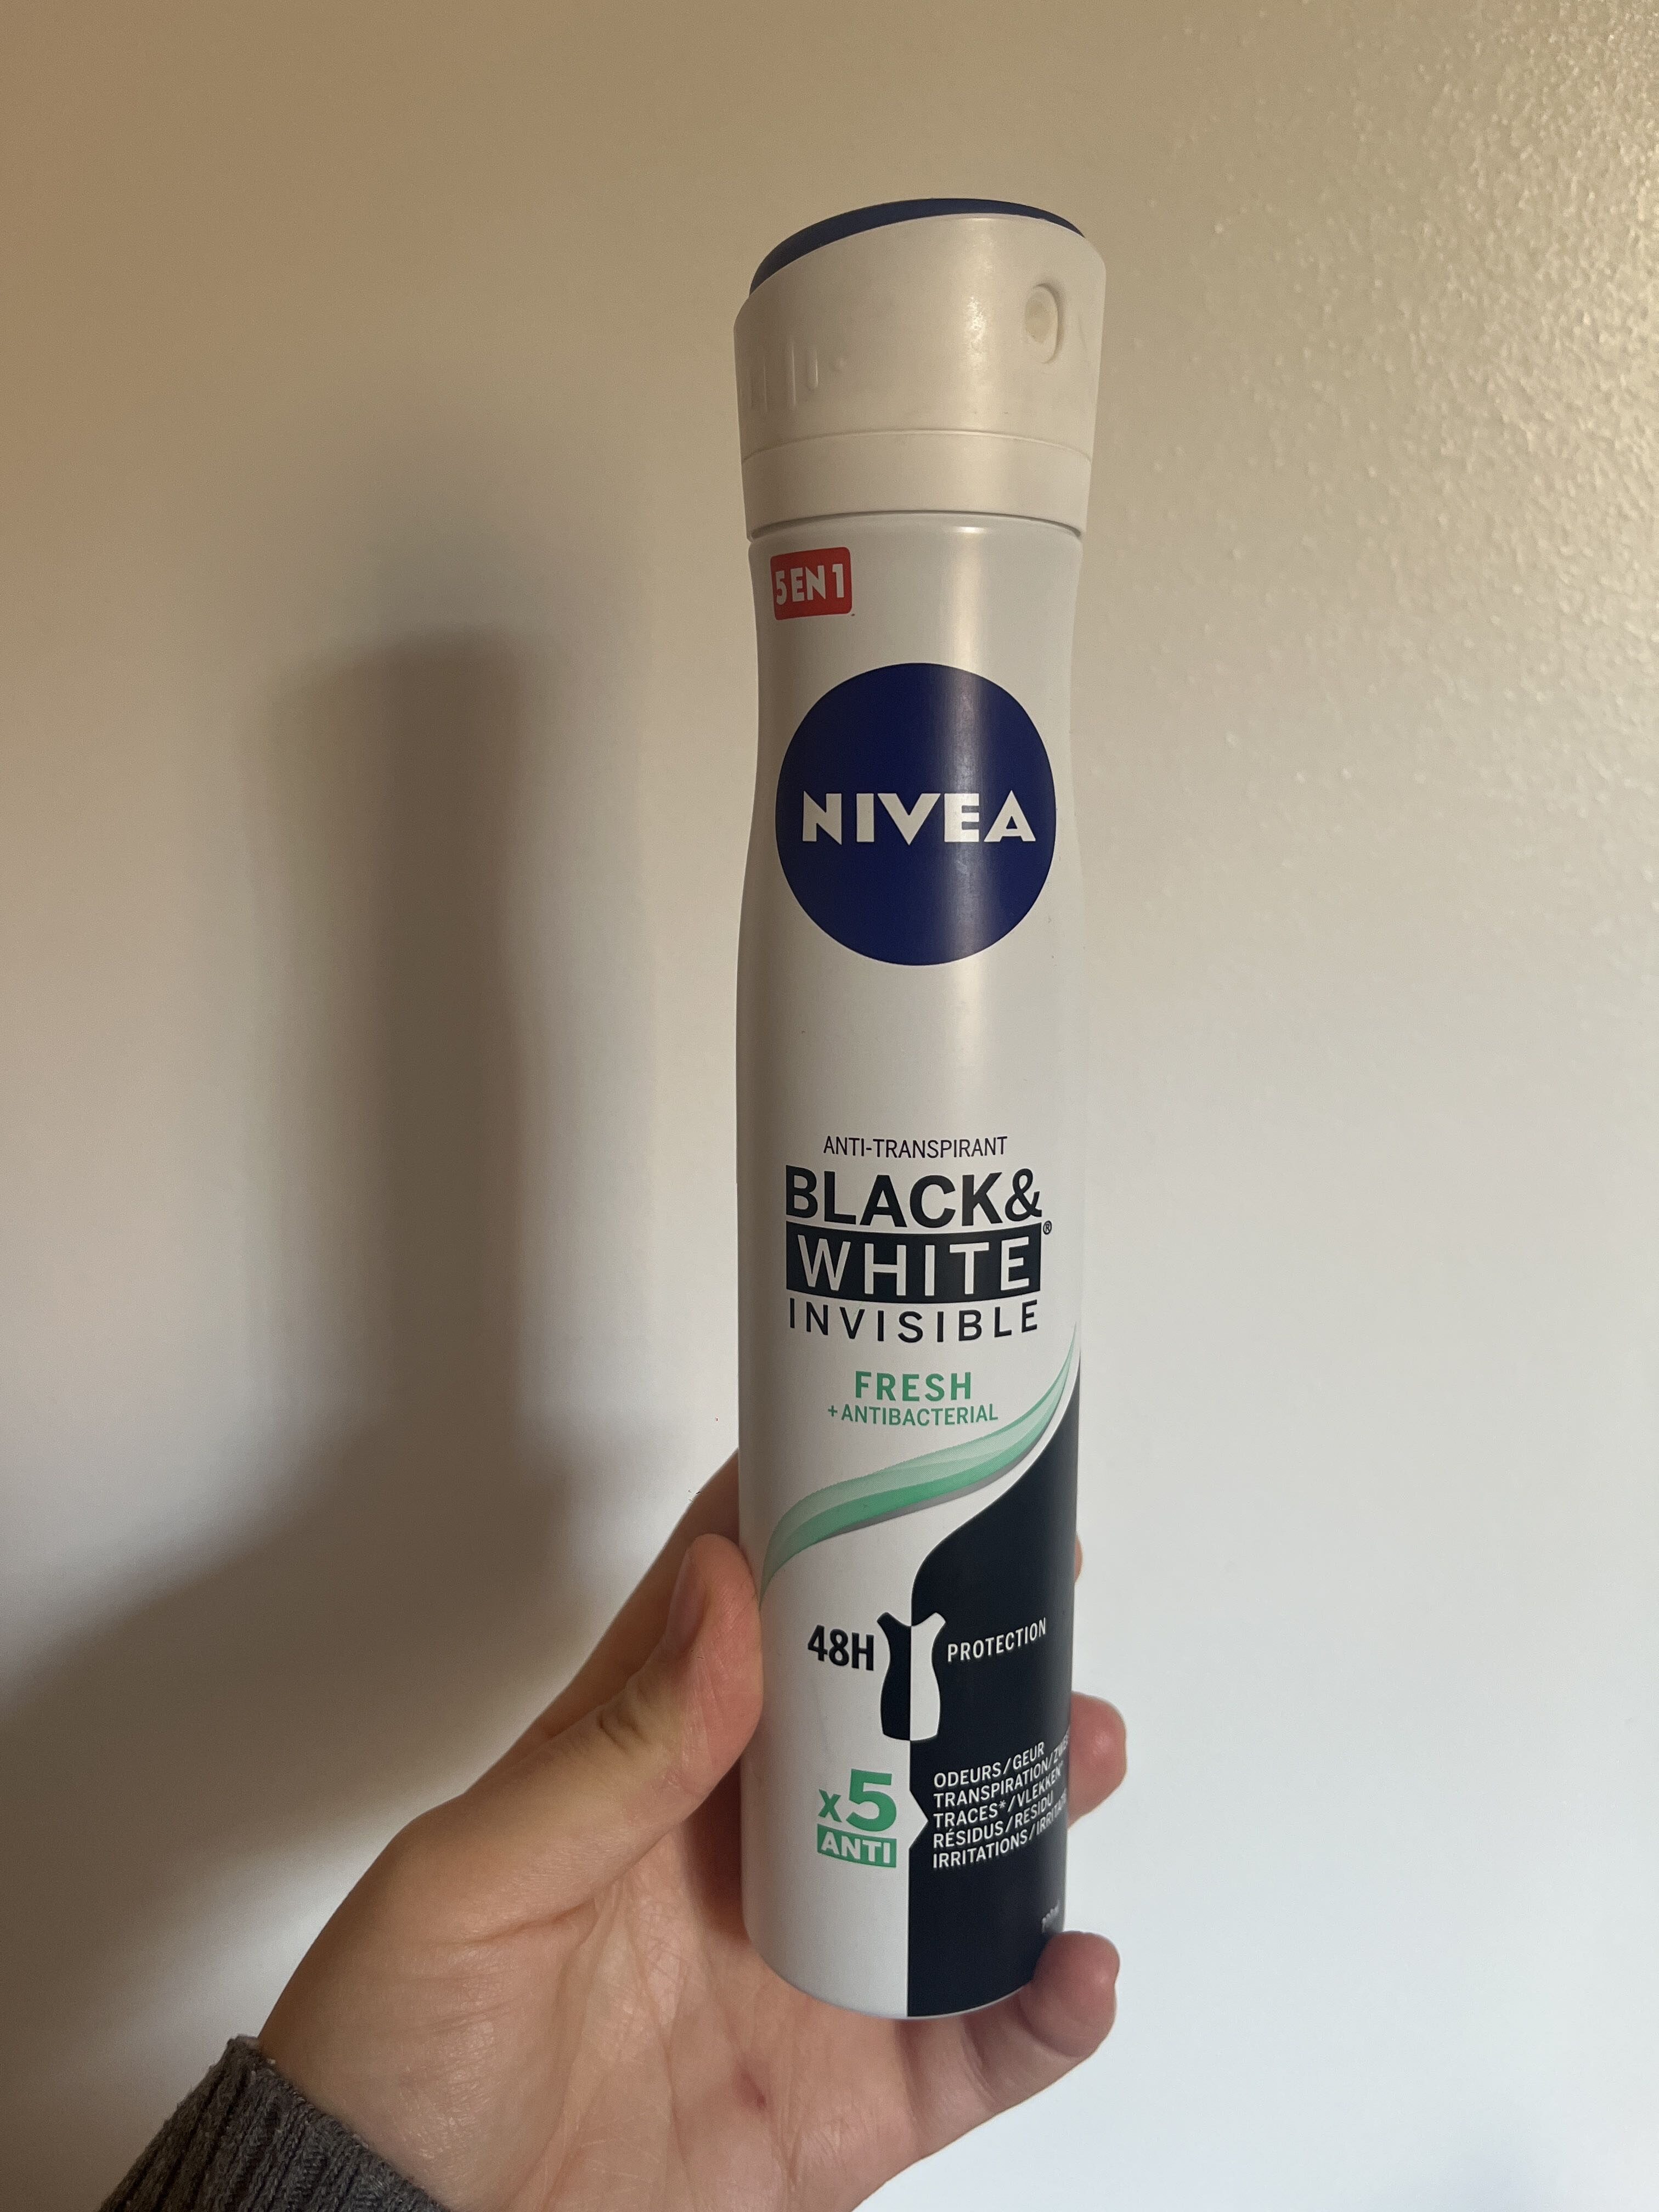 Déodorant Nivea black & white invisible - Product - fr